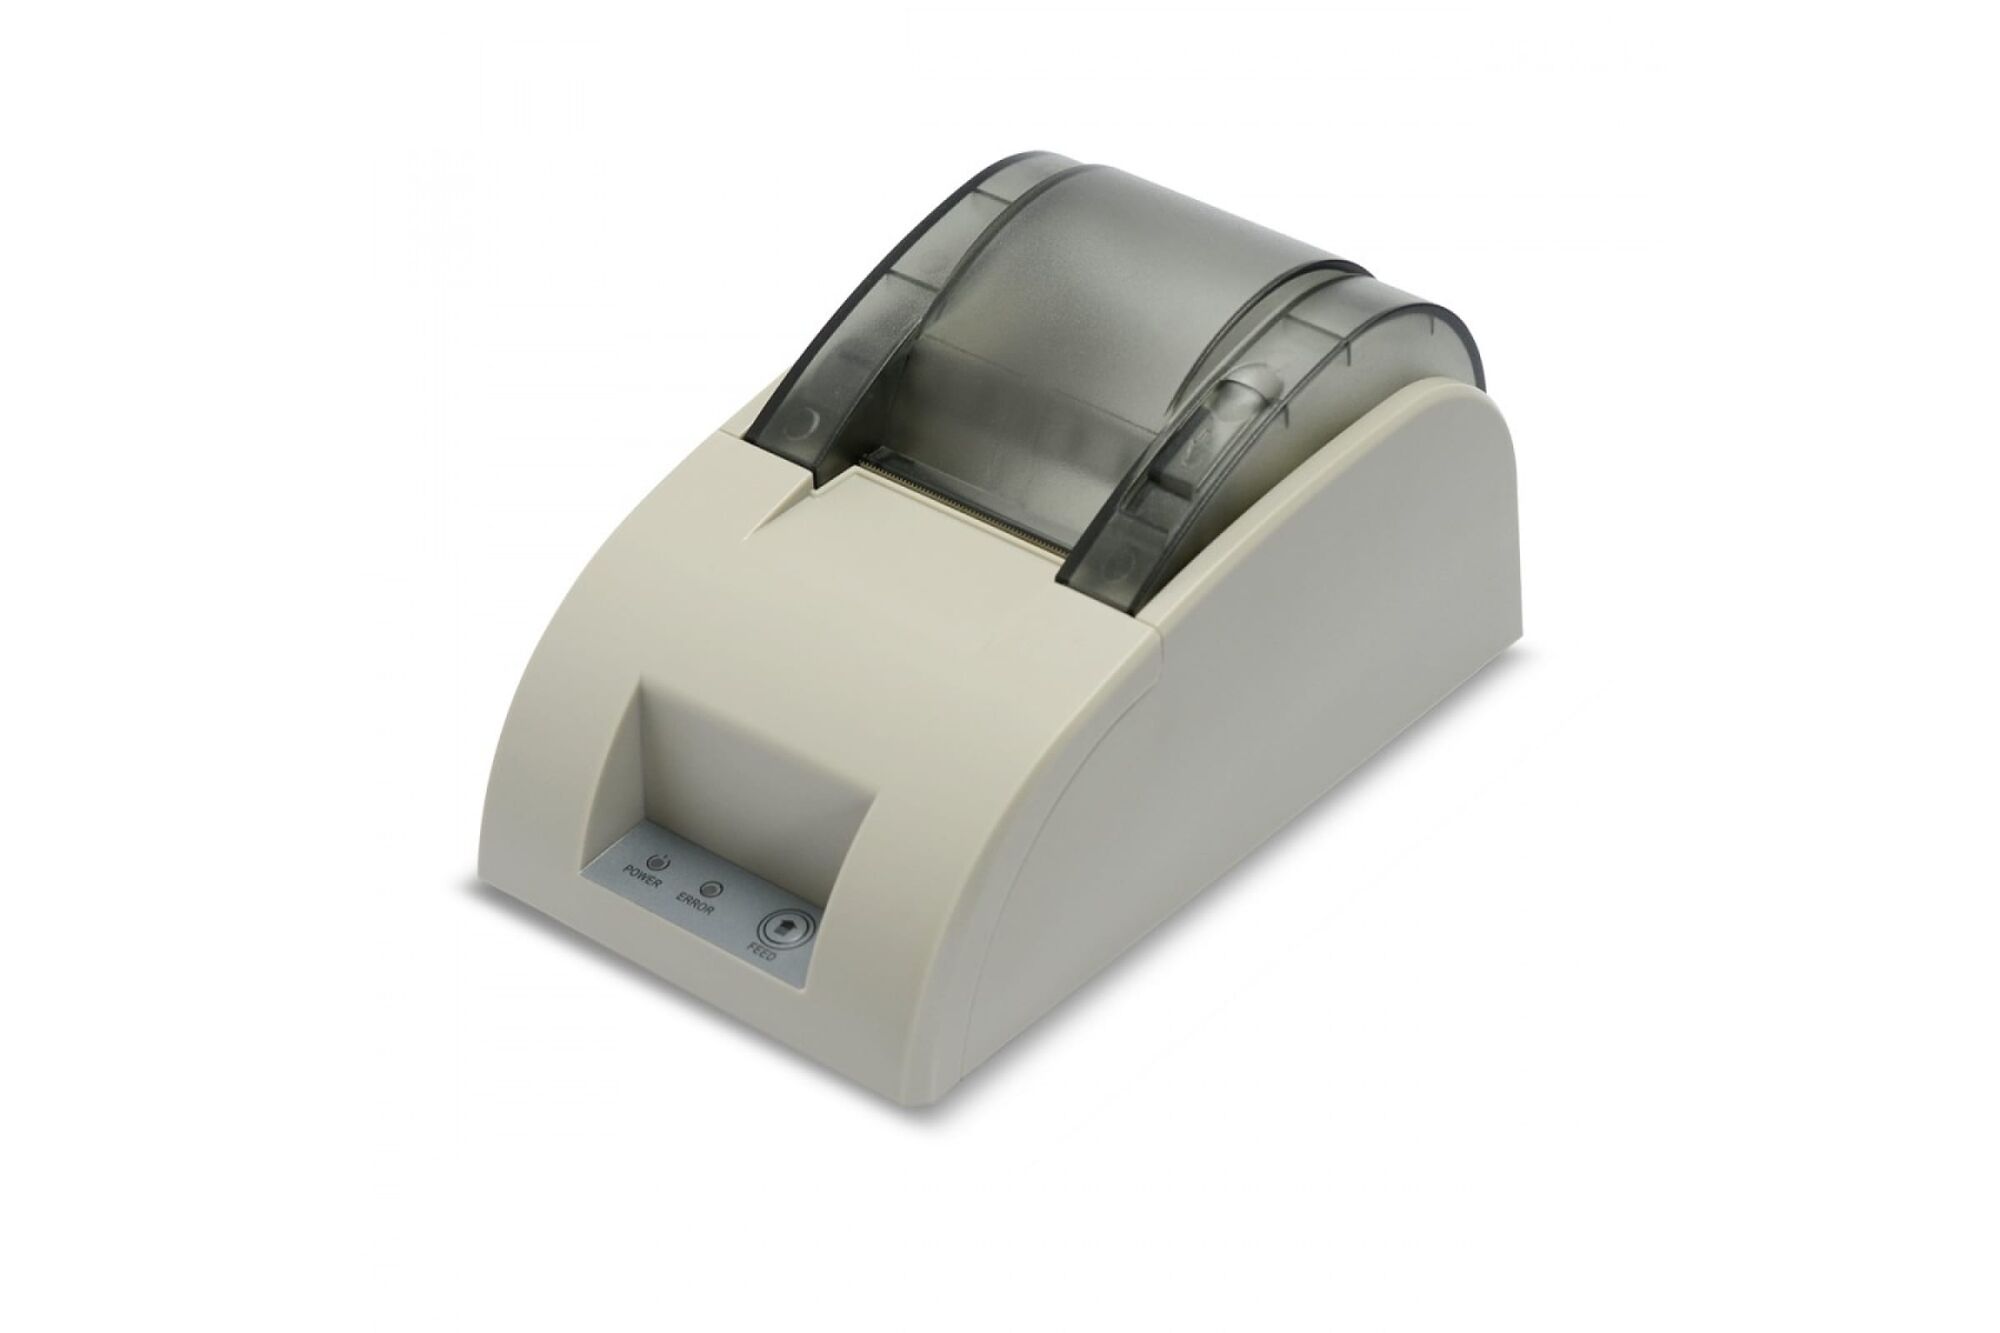 Чековый принтер MPRINT R58 USB white 4506